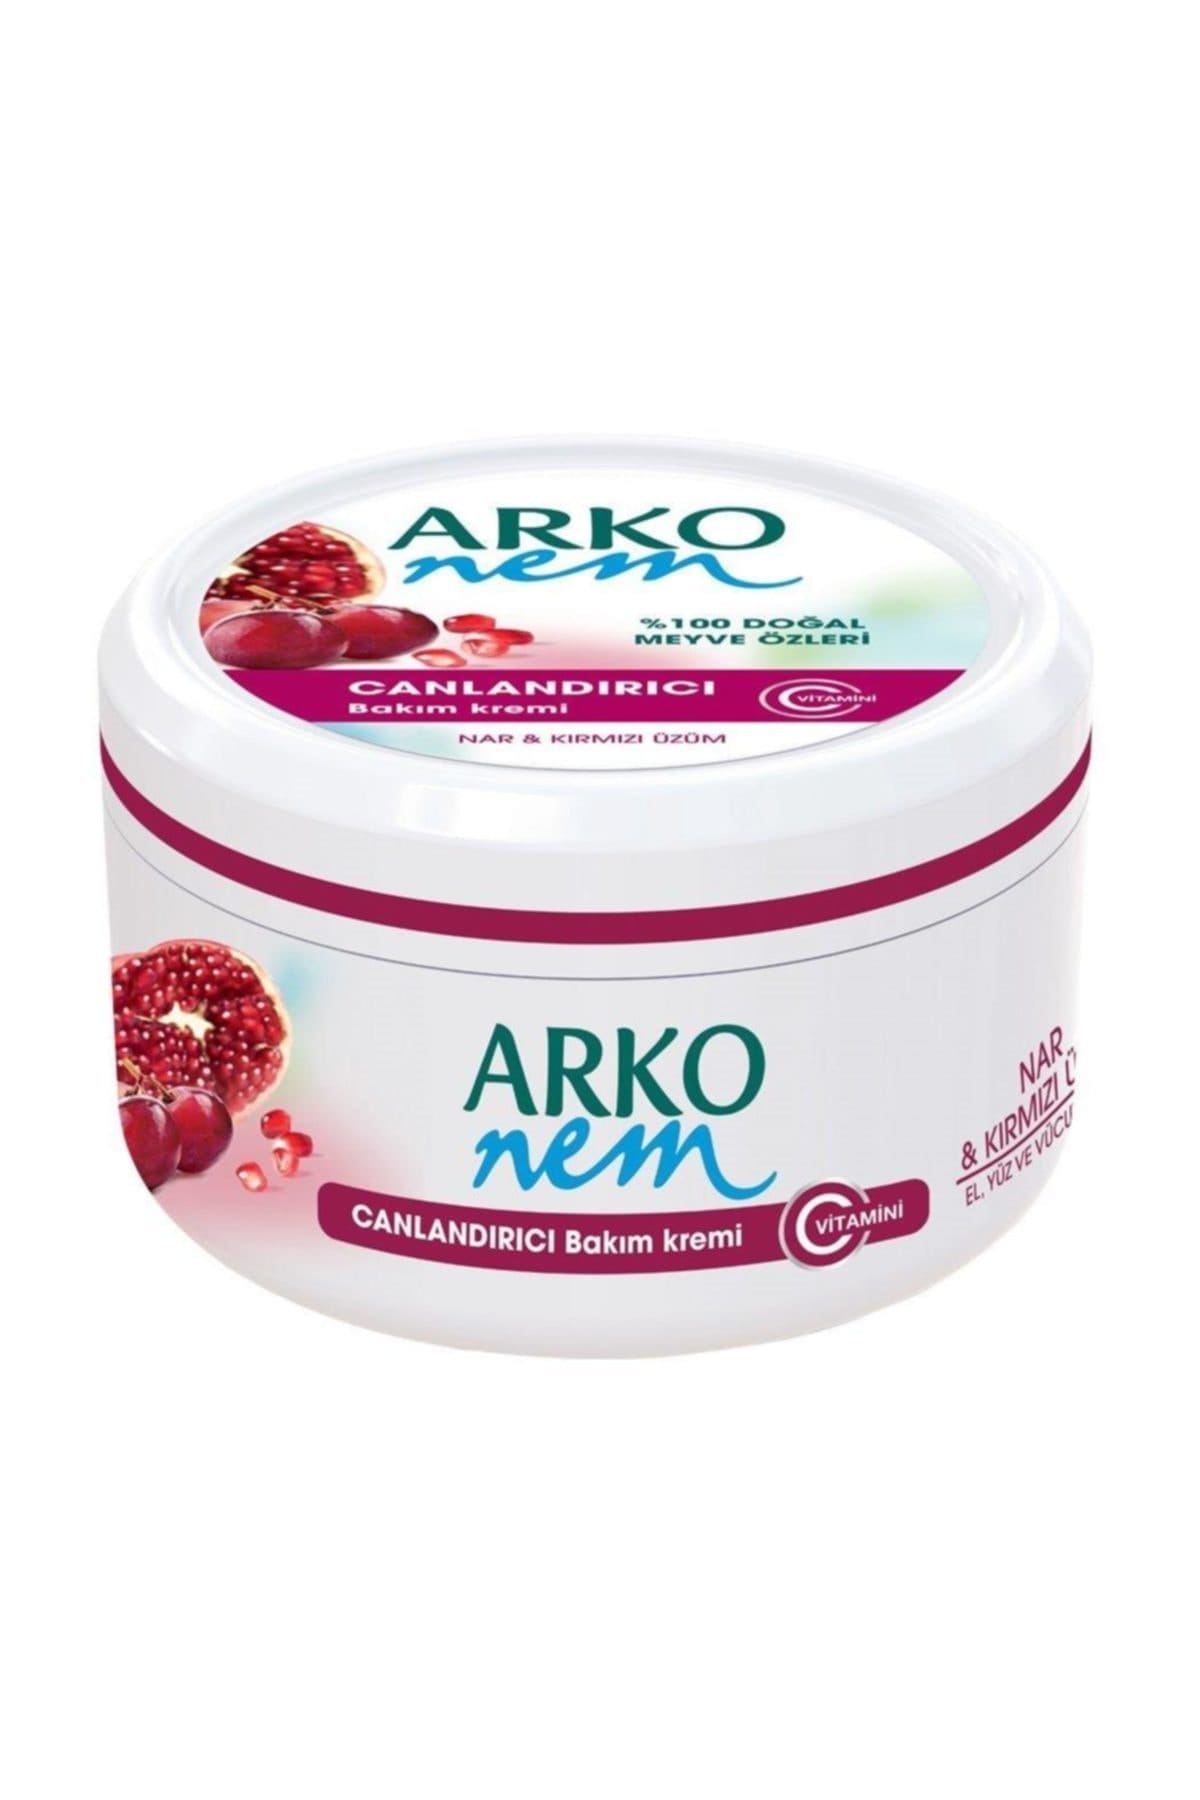 Arko Cream Fruit Care Pomegranate&grape 150 ml 